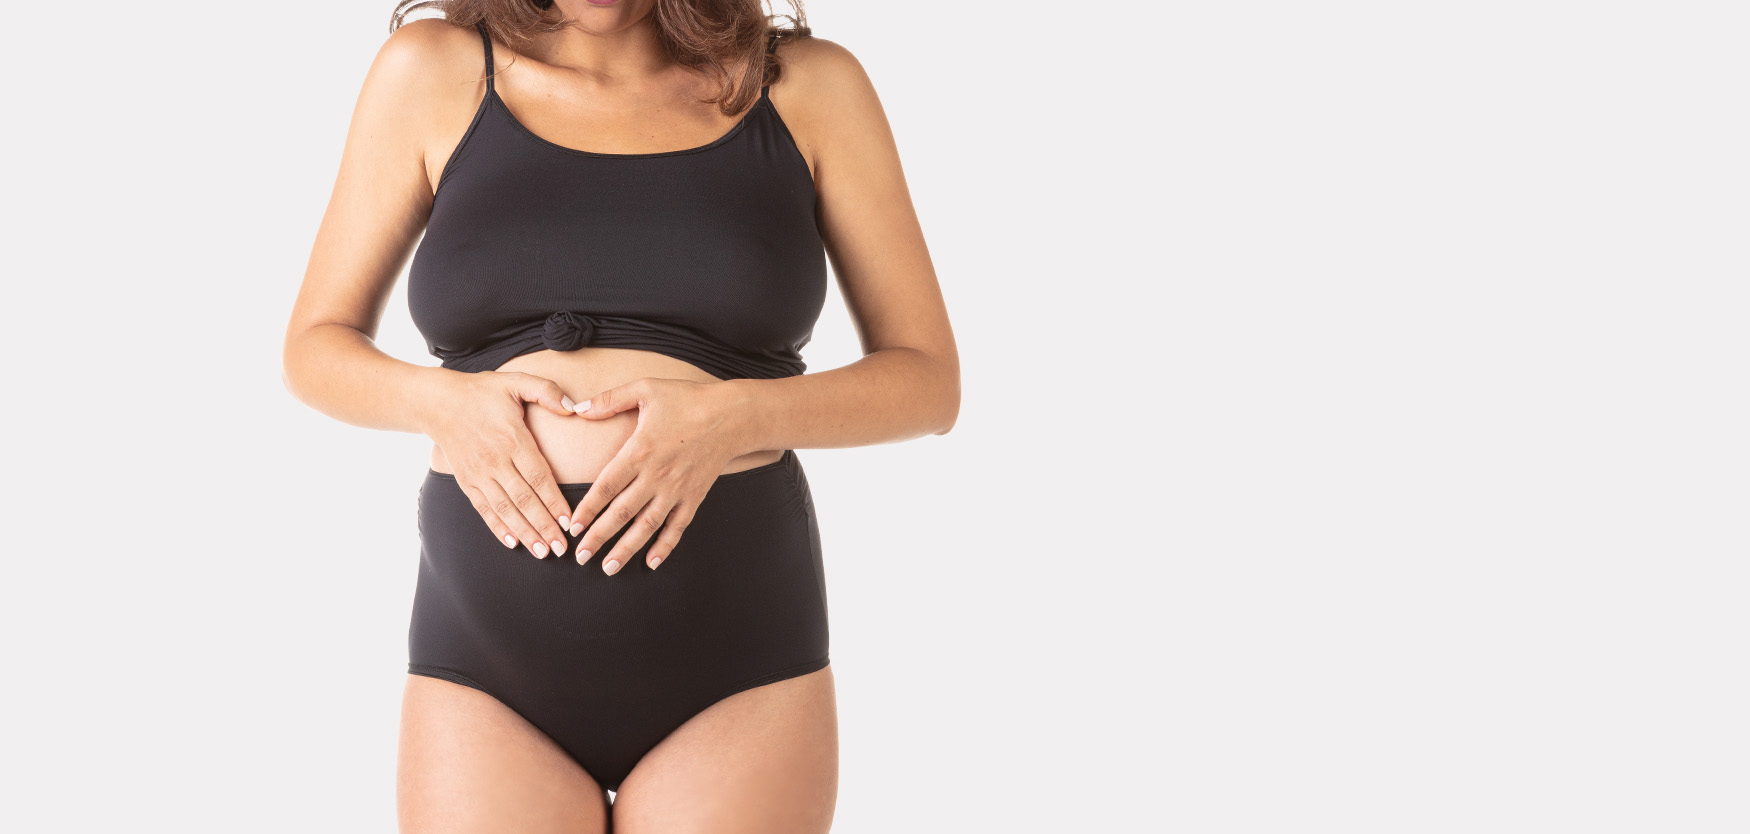 vente en ligne sous-vêtement grossesse ,femme enceinte Kontakt tendance mode Tunisie